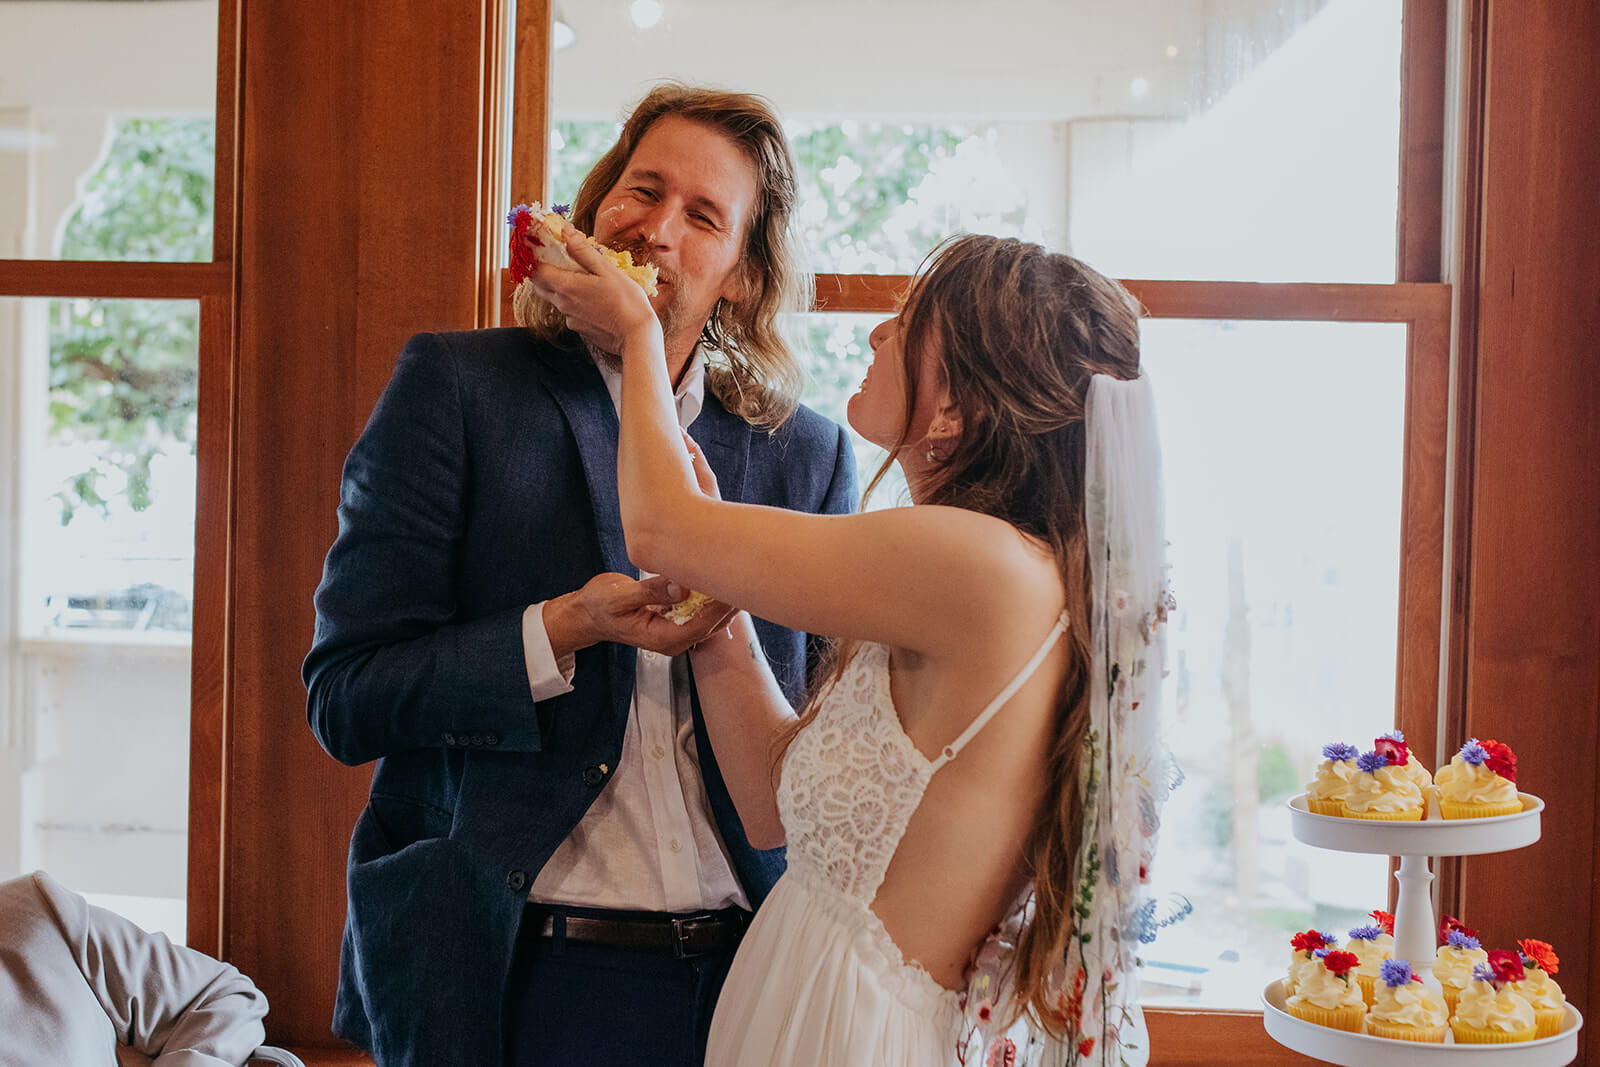 Bride feeds groom cake during casual wedding reception